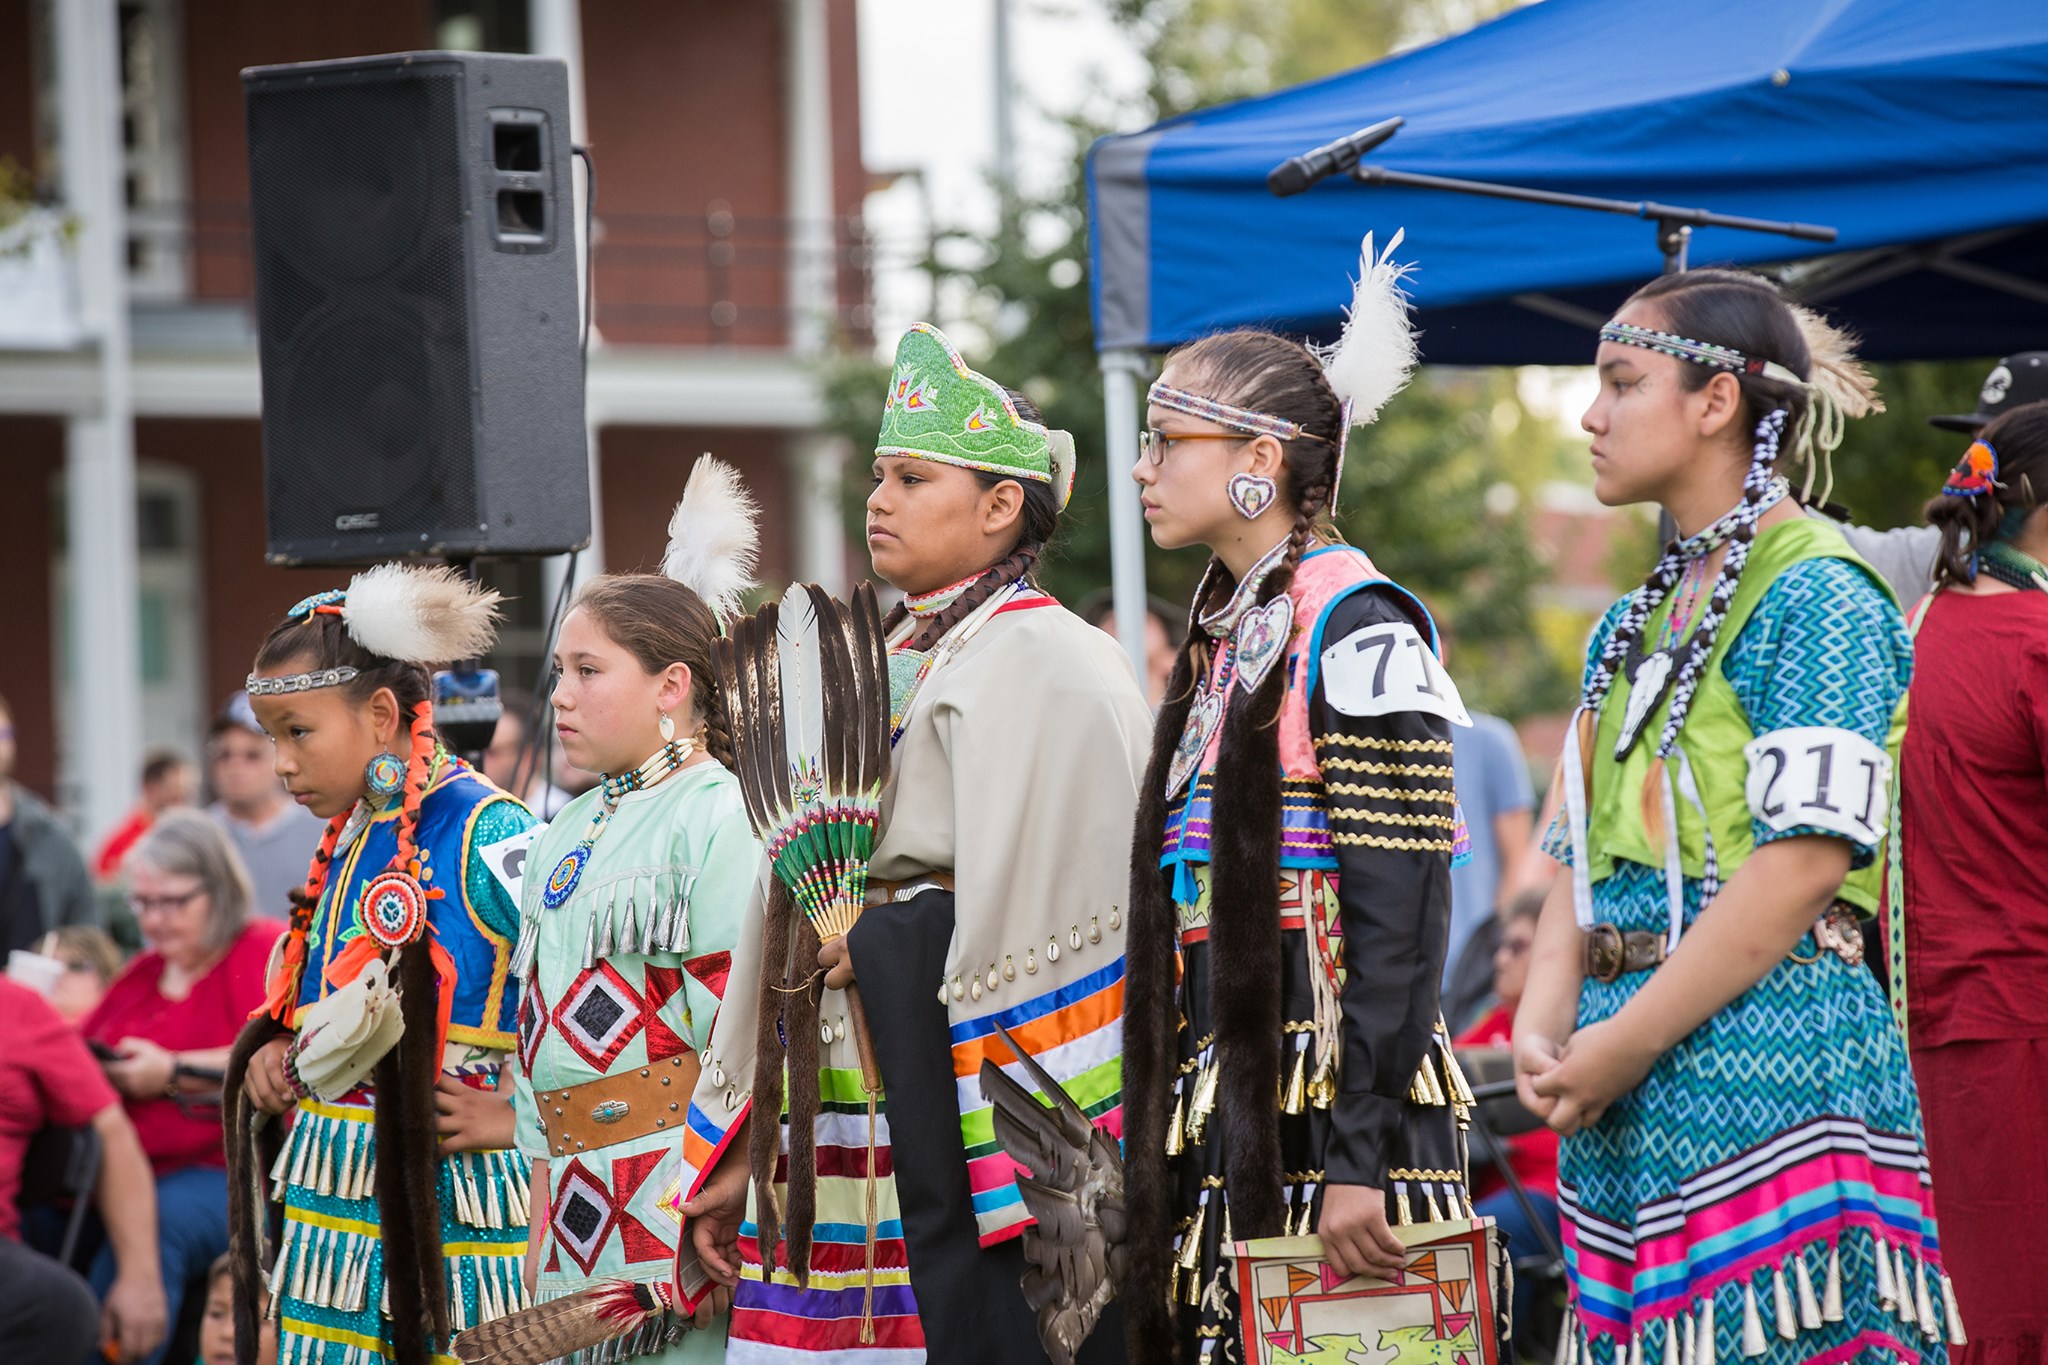 Five young women dressed in Native American regalia